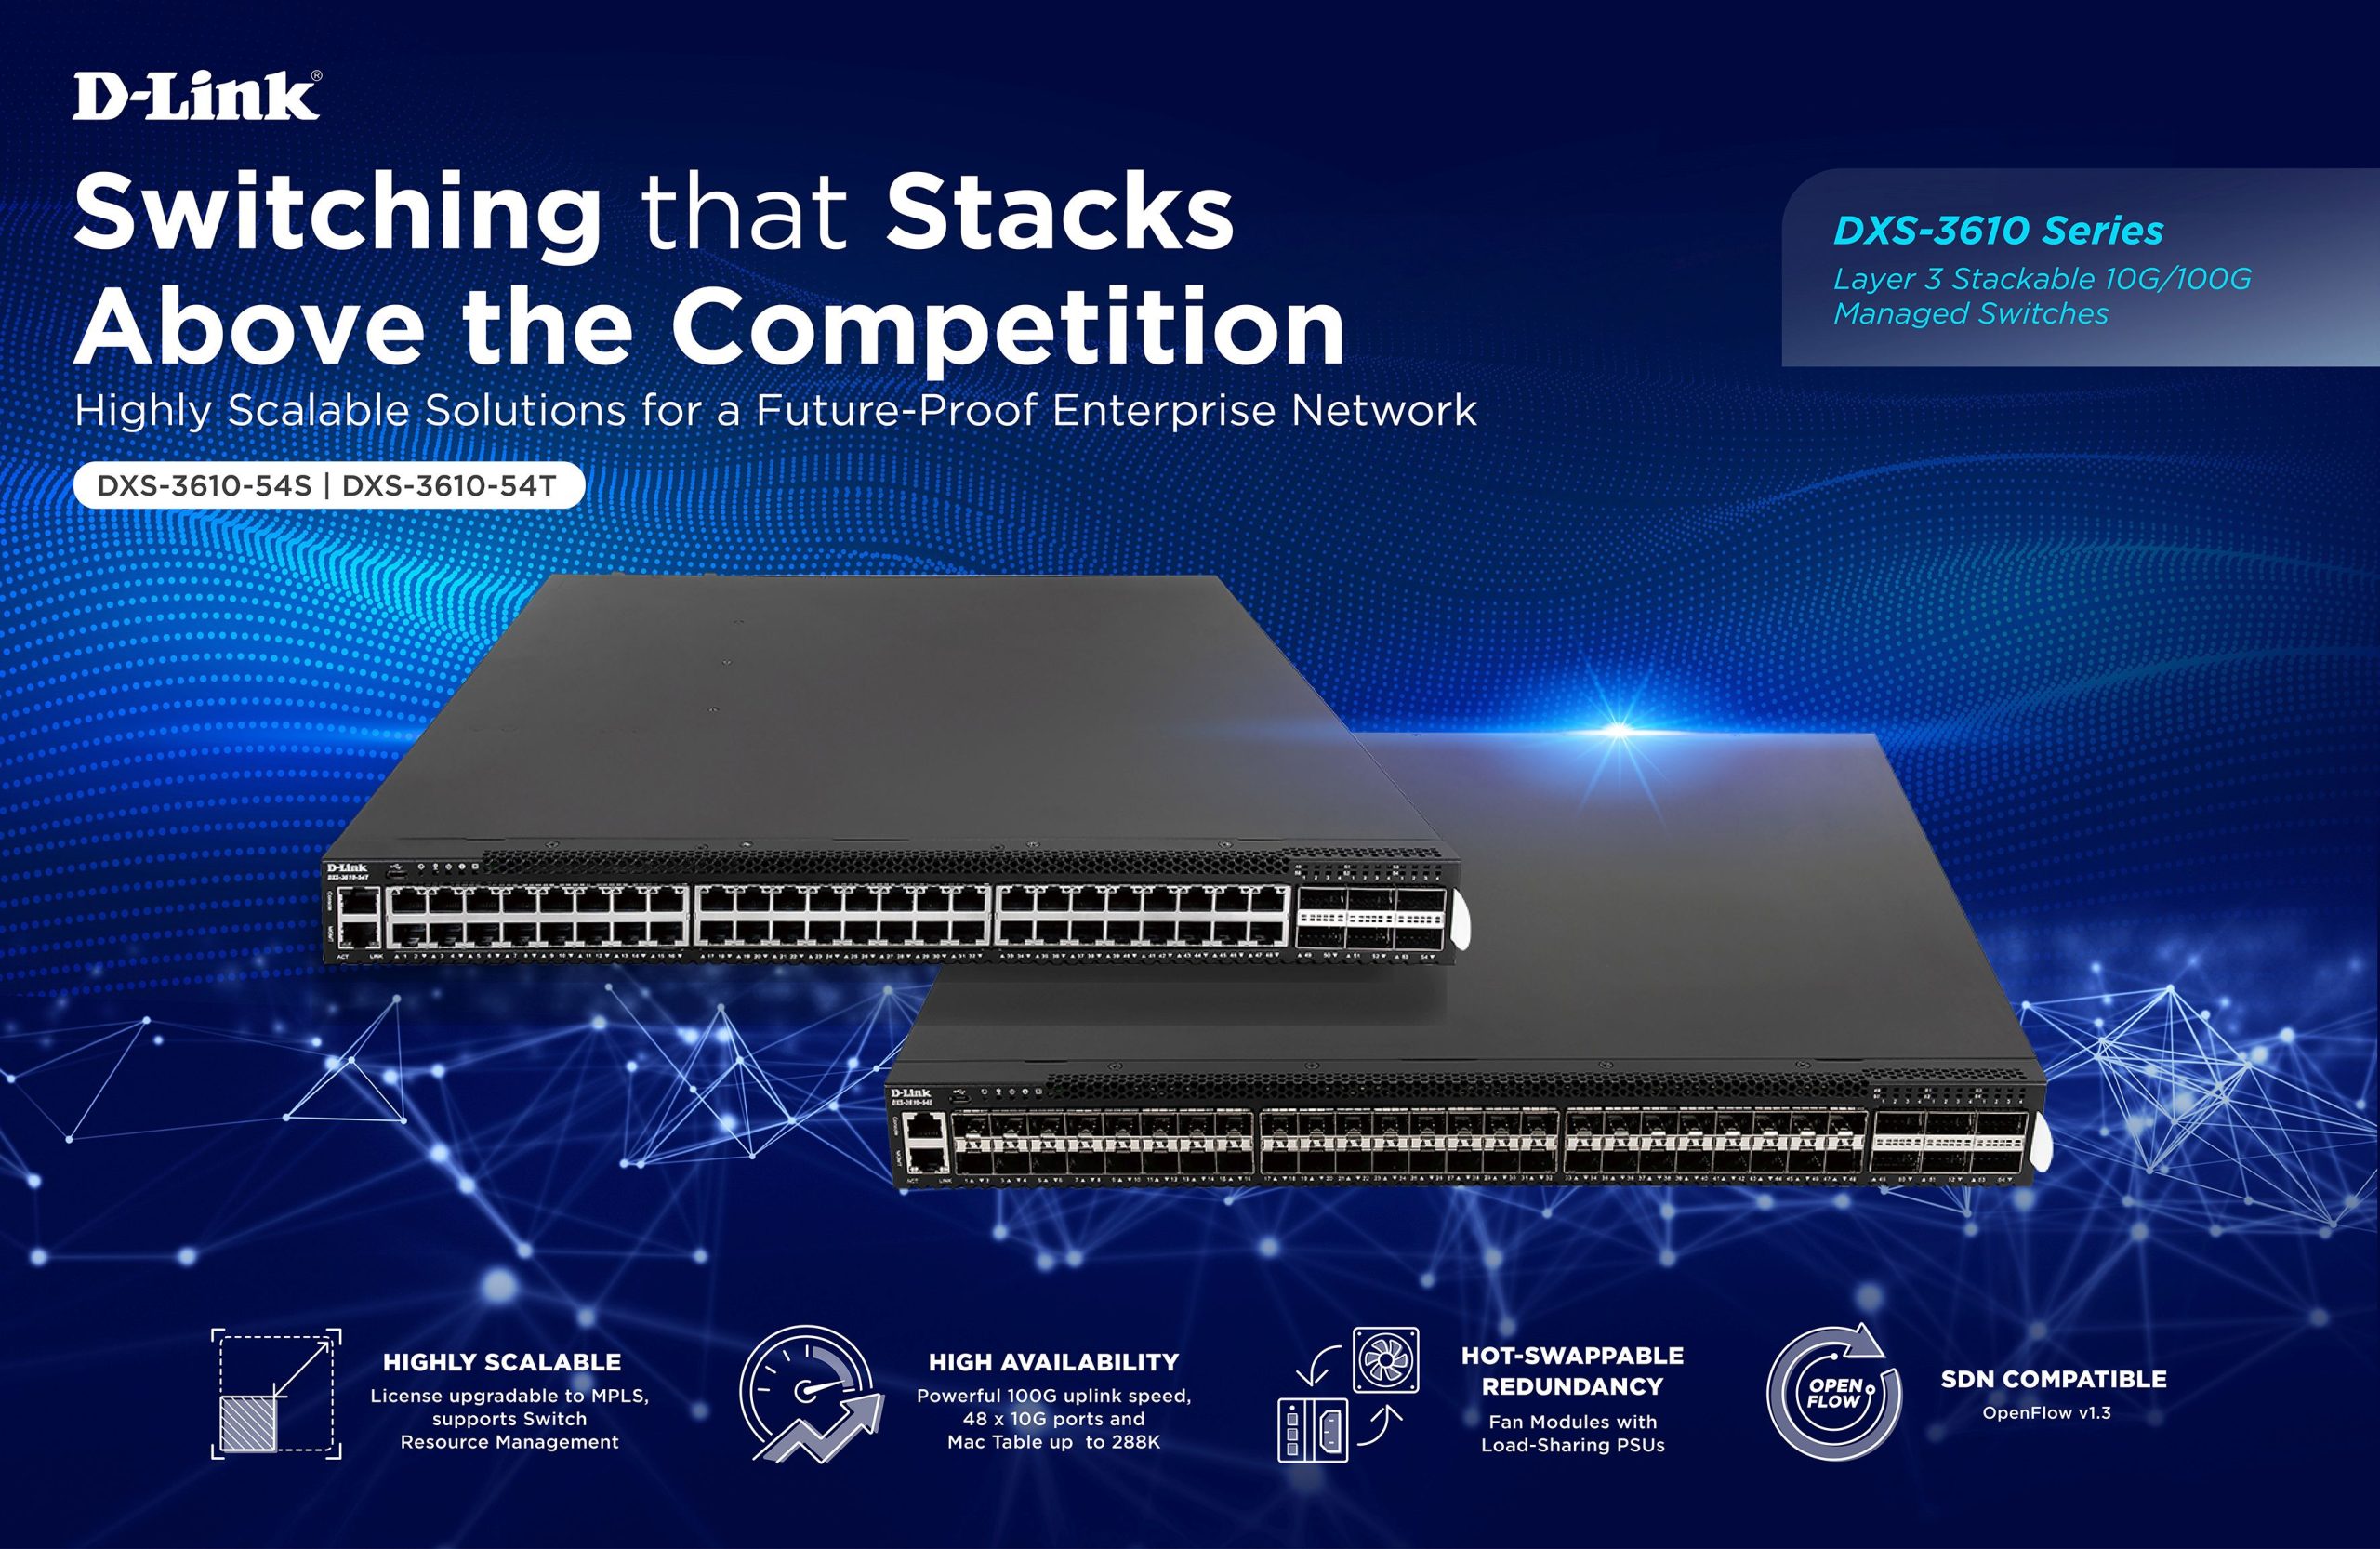 D-Link Meluncurkan Layer 3 Stackable 10G Managed Switch bagi Enterprise Network yang Future-Proof